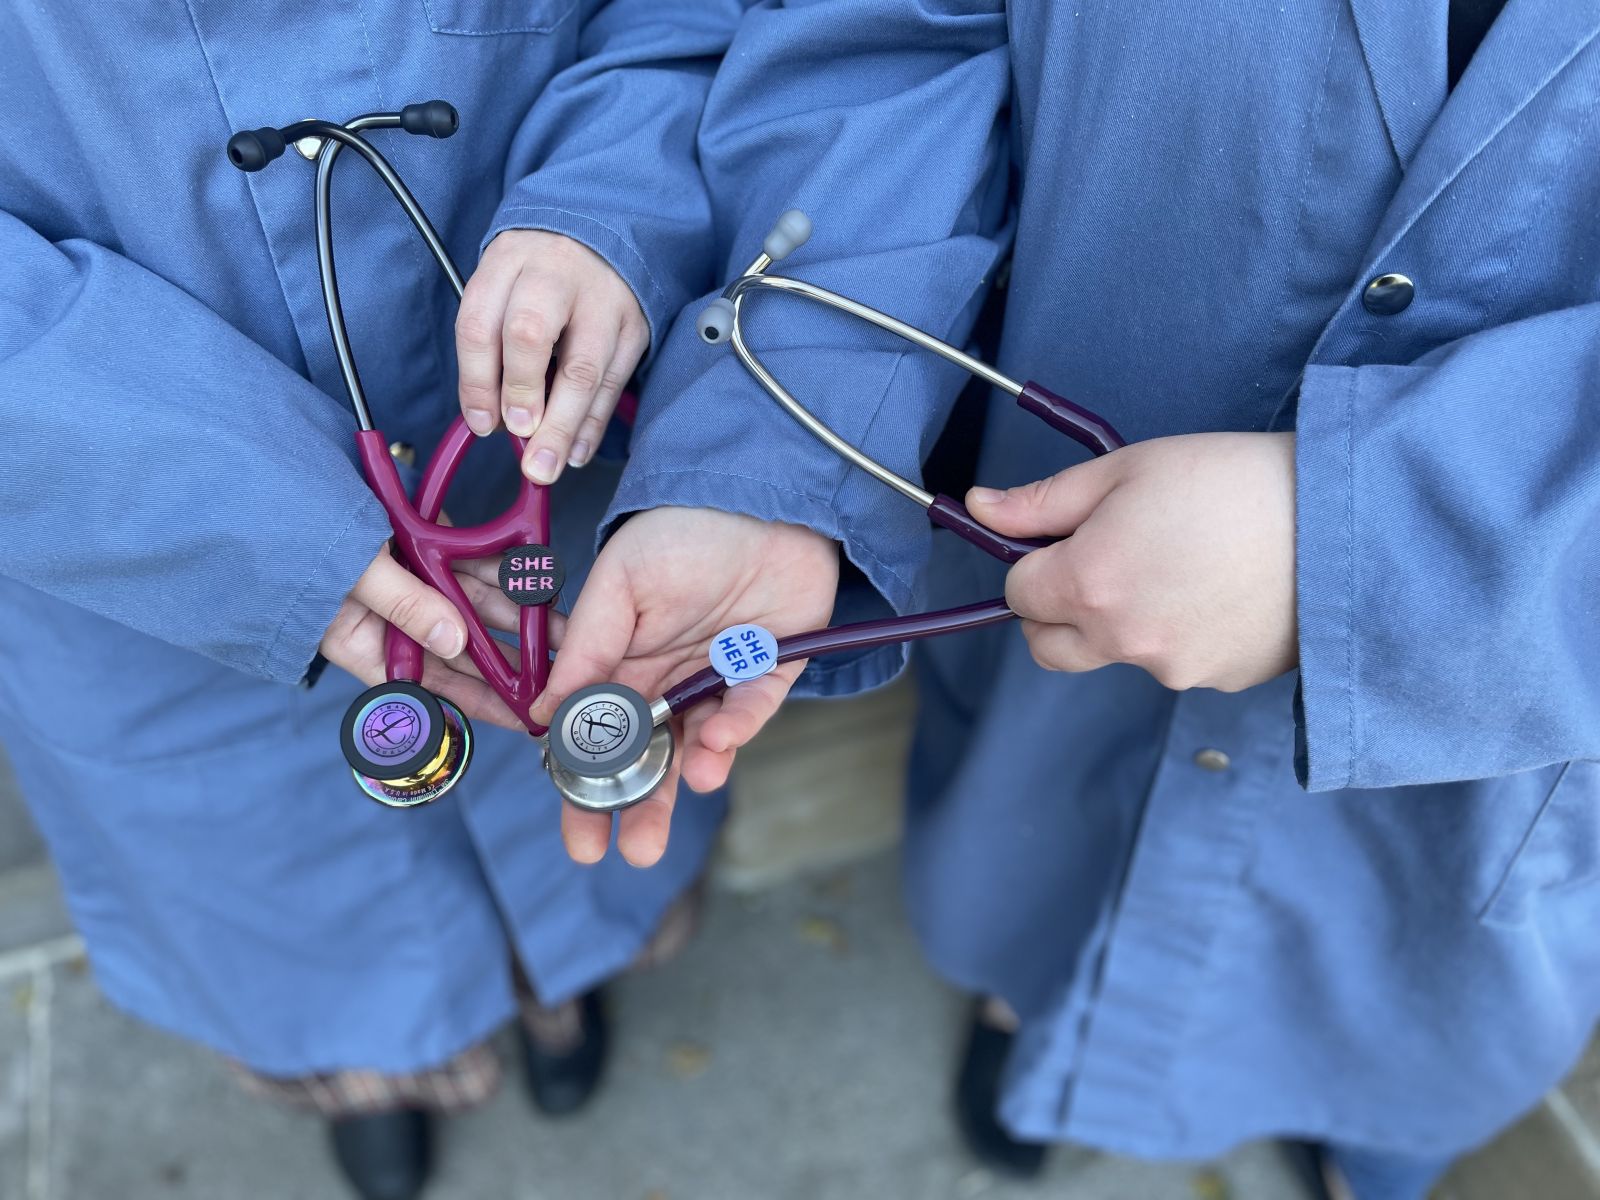 OVC student veterinarians holding stethoscope pronoun clips